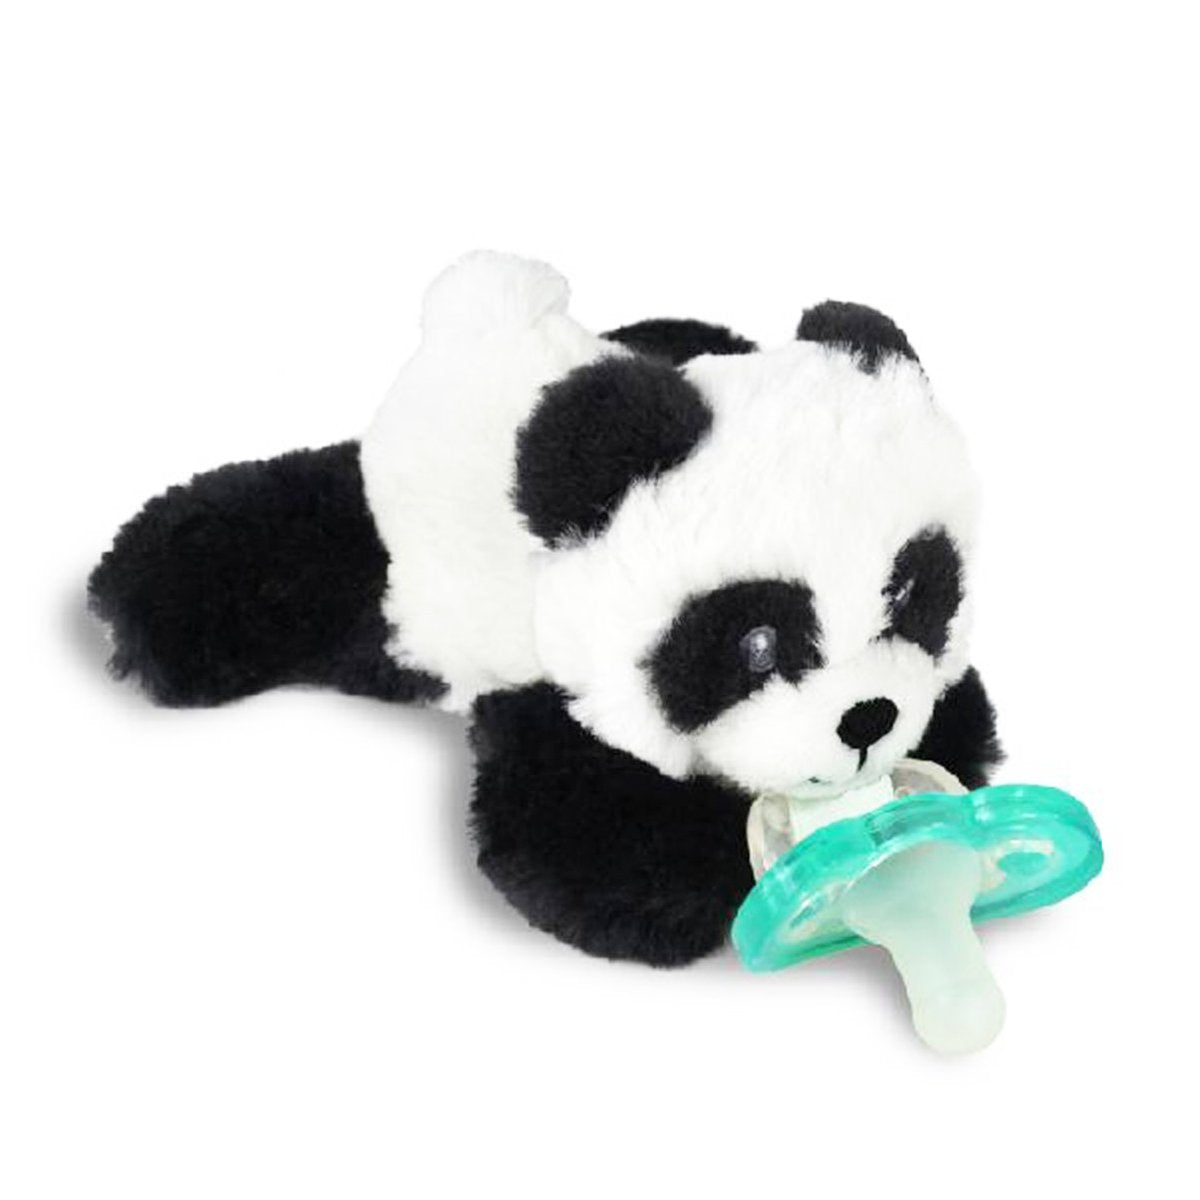 Razbuddy-Plush-Toy-with-Jollypop-Pacifier-Panda